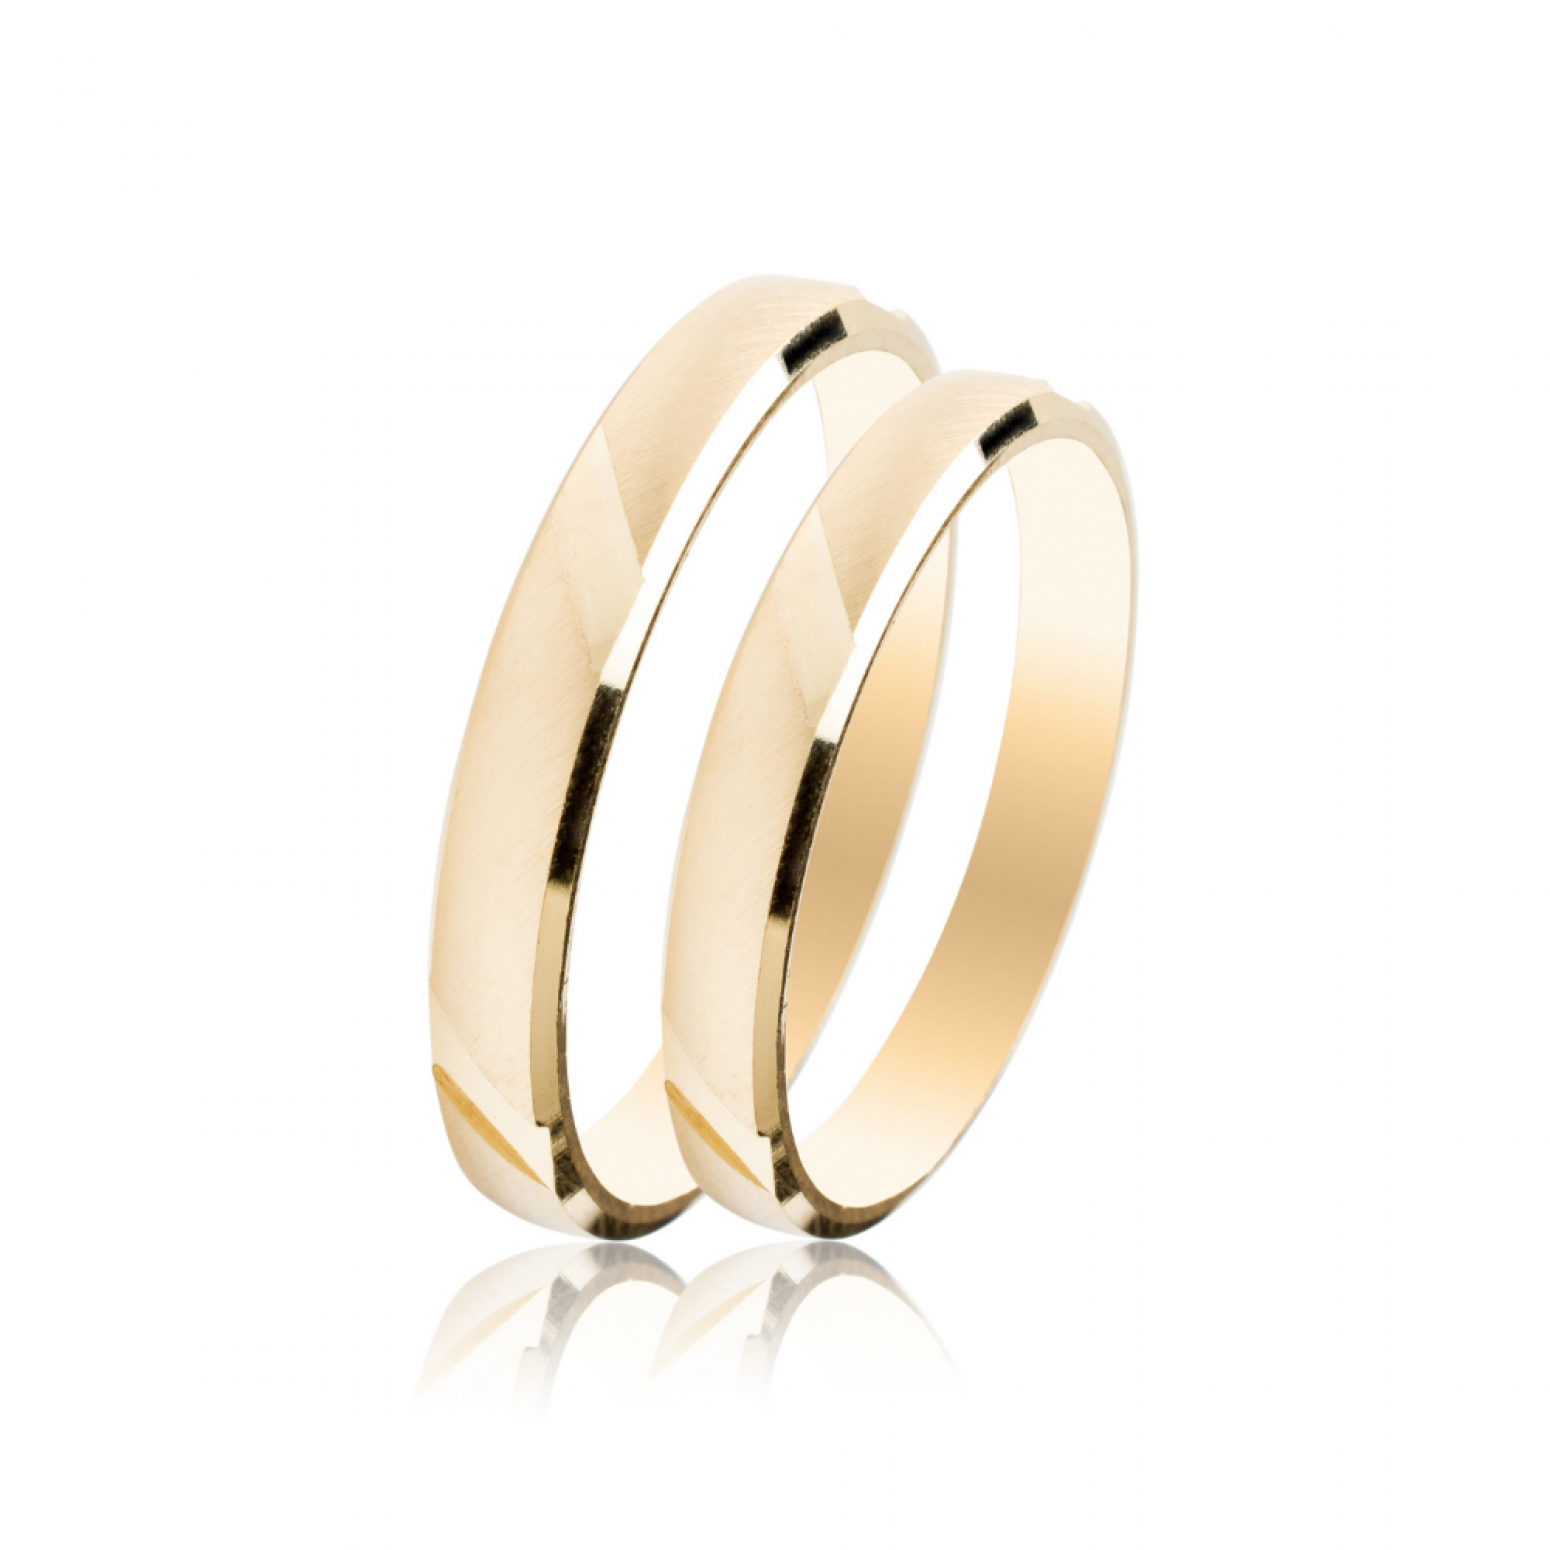 Maschio Femmina wedding rings in yellow gold, K9, pair da4029 WEDDING RINGS Κοσμηματα - chrilia.gr